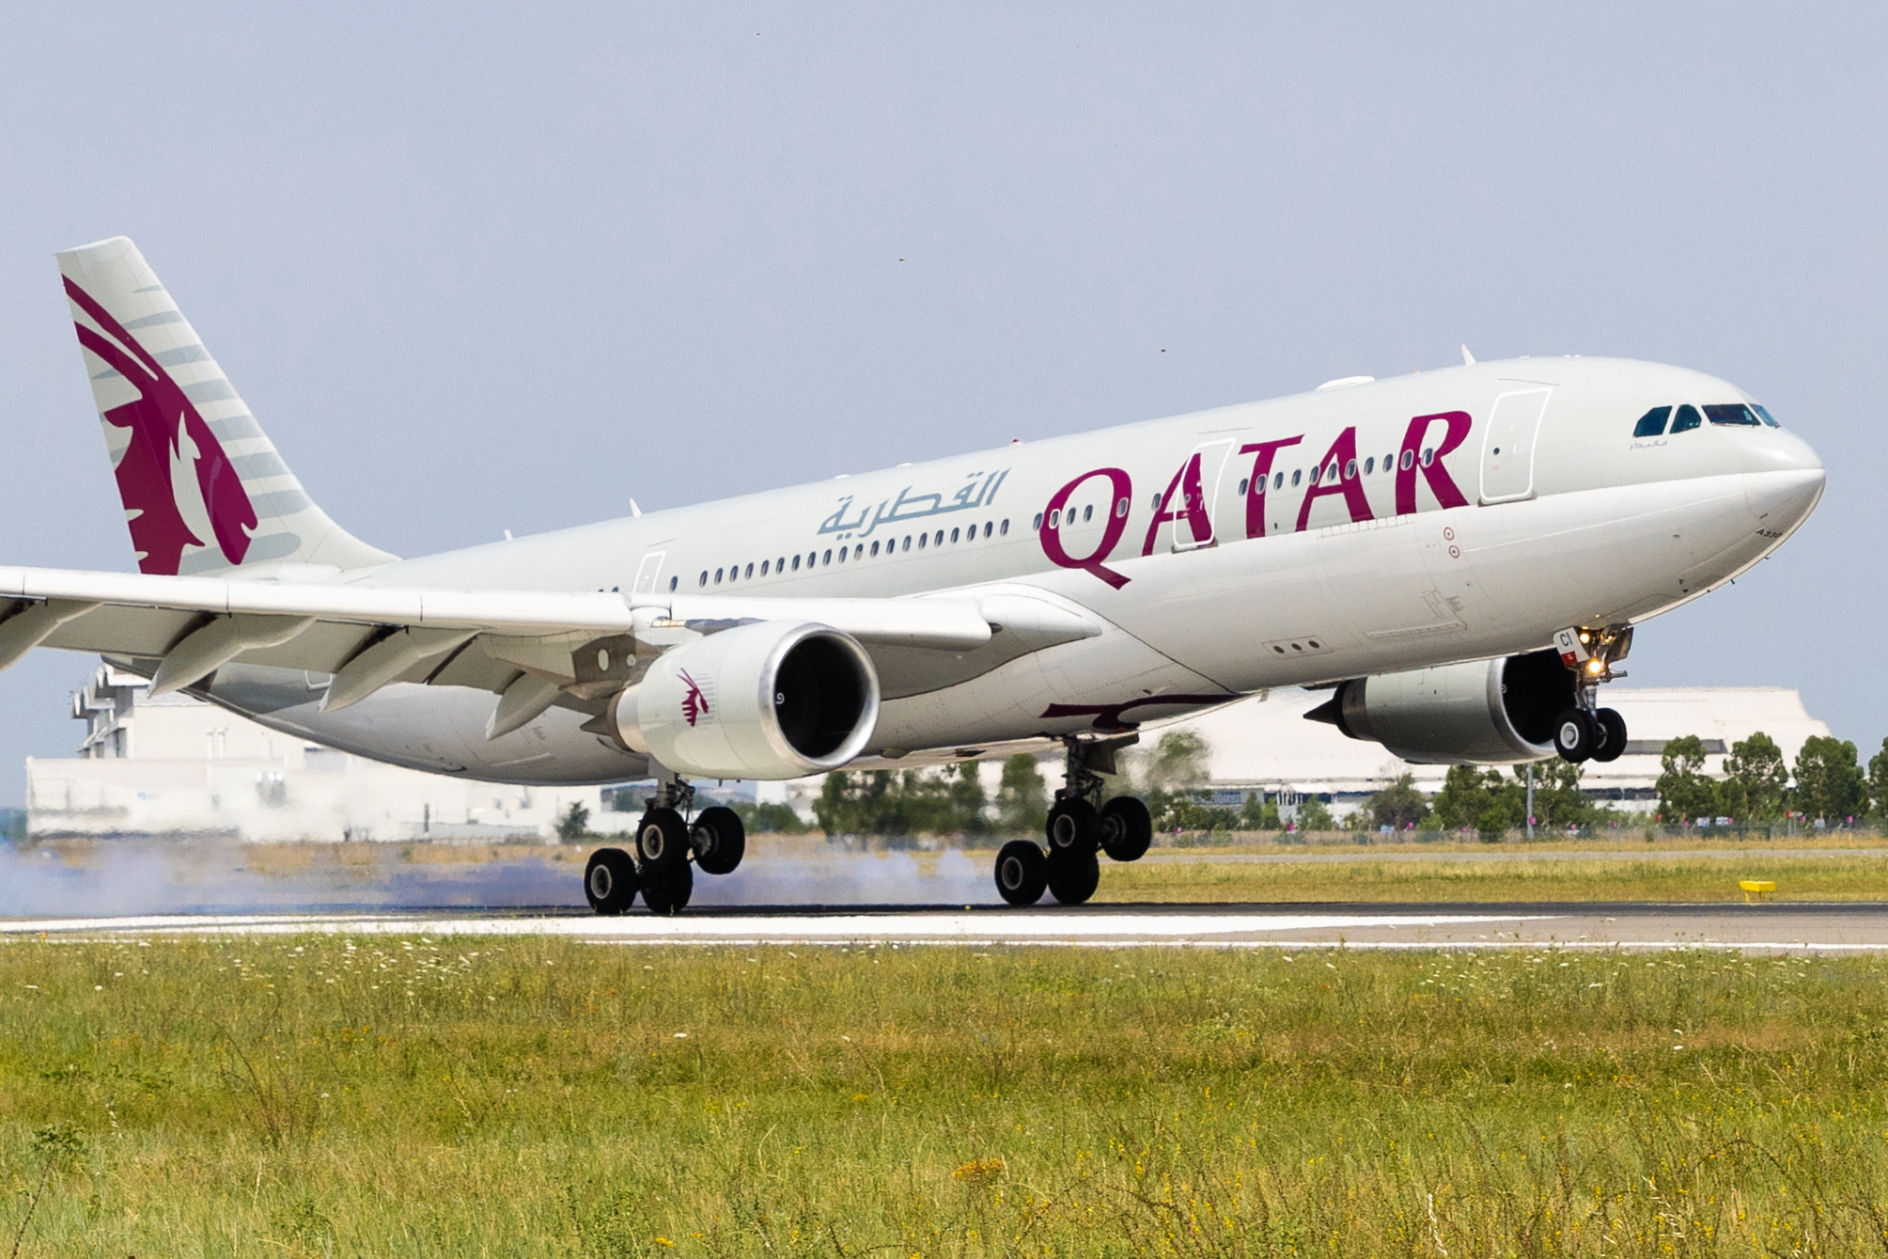 Qatar Airways A330-200 landing at TLS. Click to enlarge.